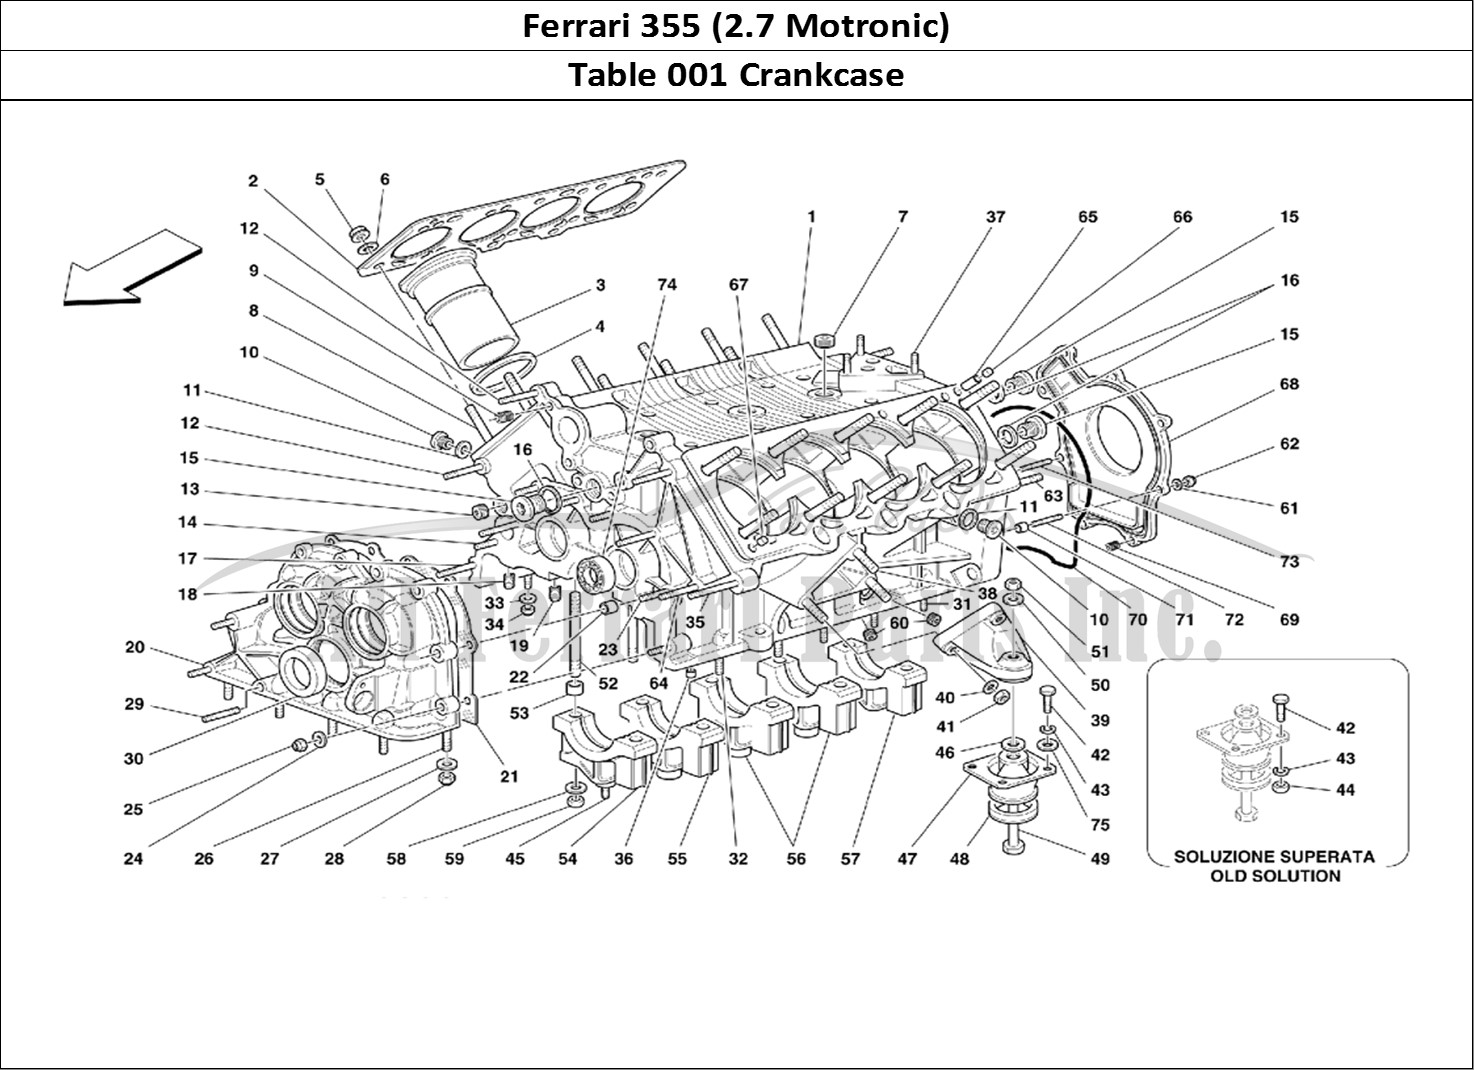 Ferrari Parts Ferrari 355 (2.7 Motronic) Page 001 Crankcase